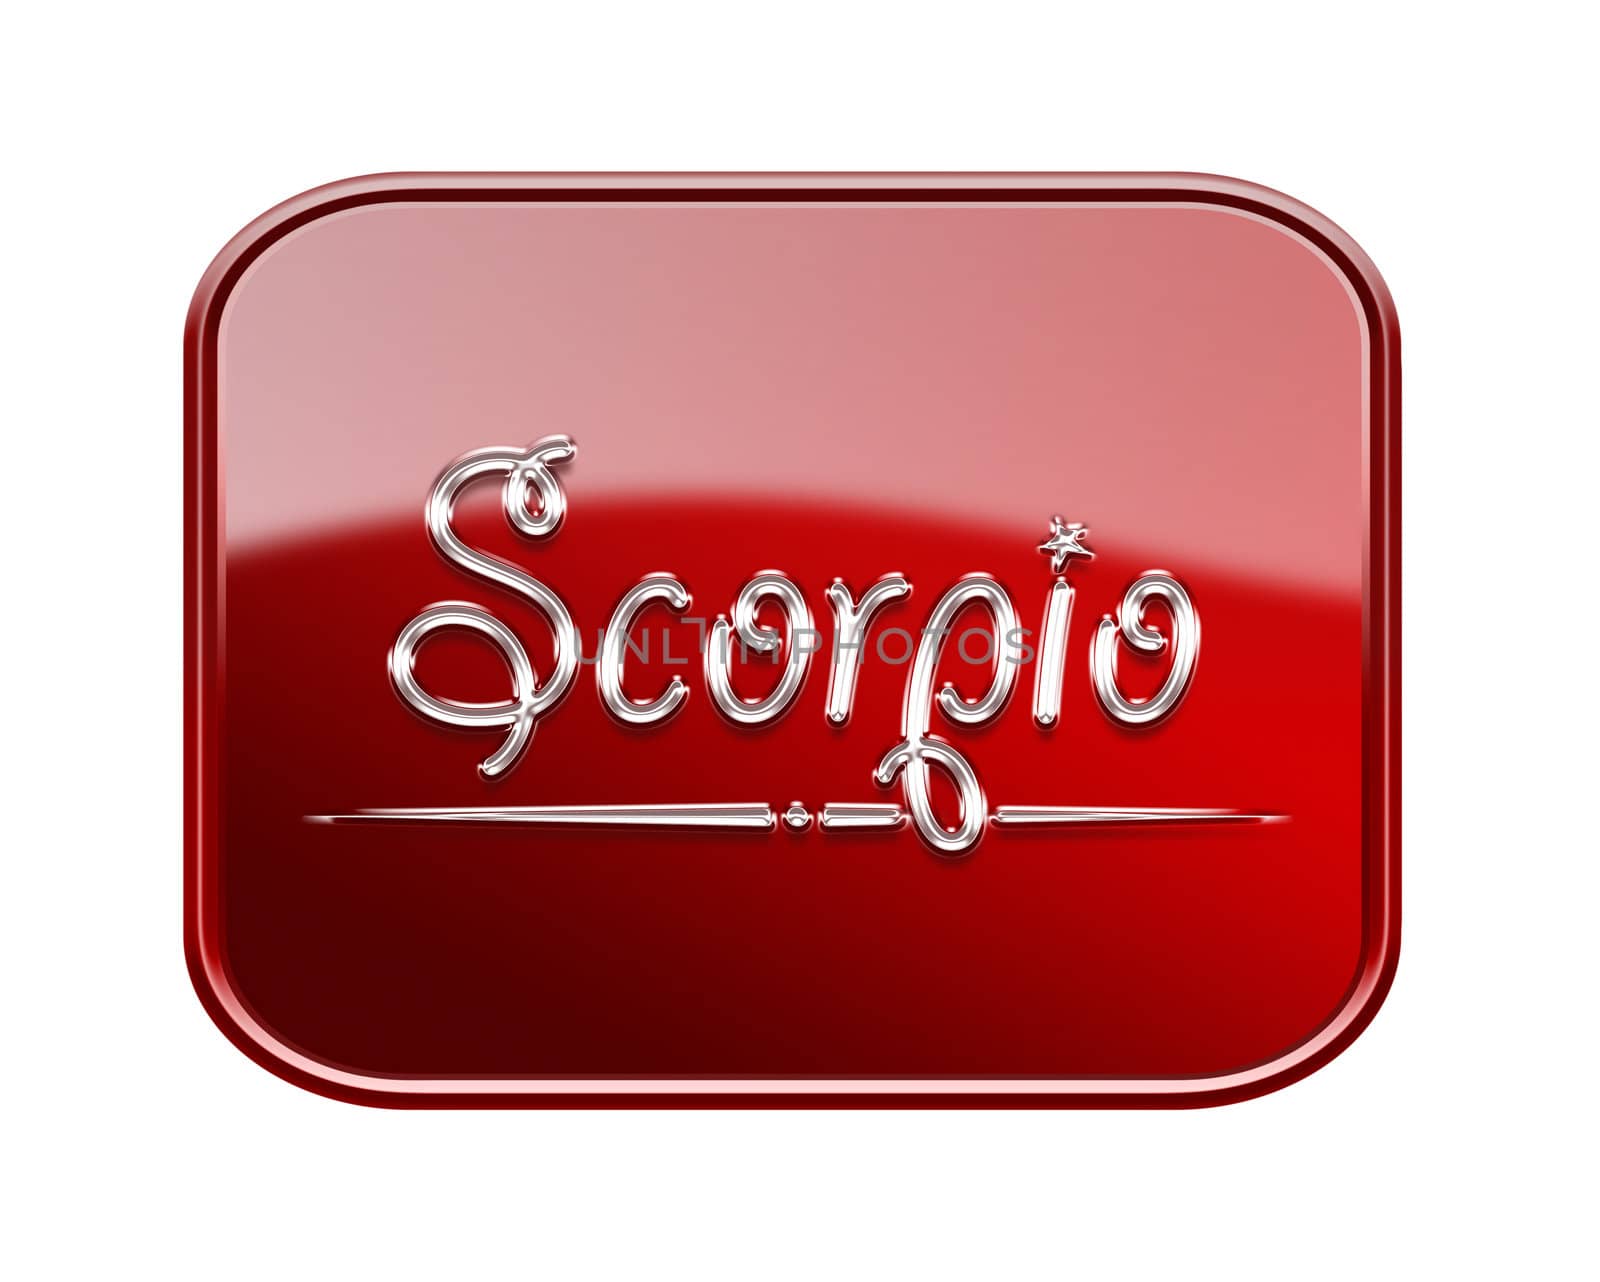 Scorpio zodiac icon red glossy, isolated on white background